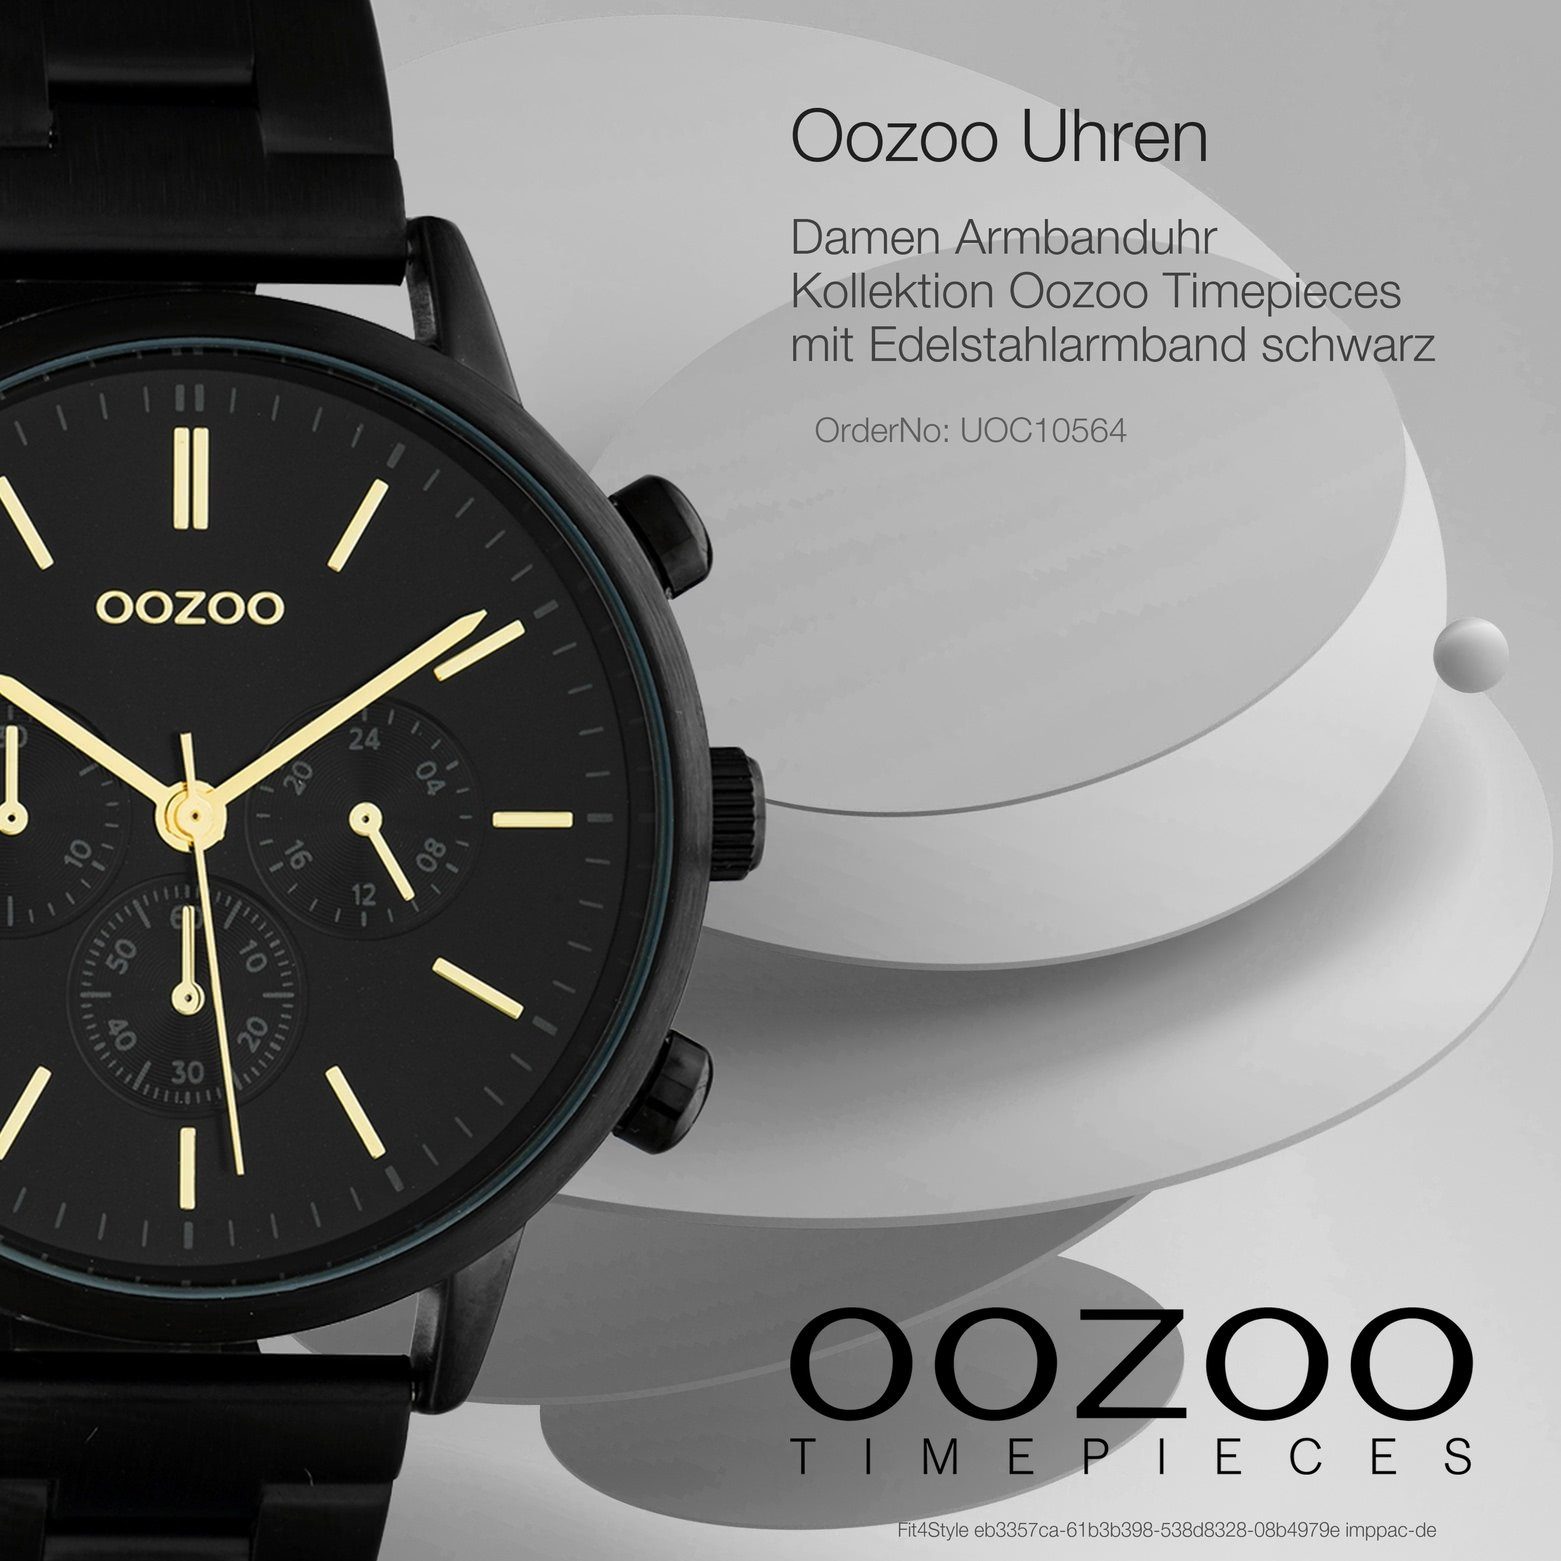 Damenuhr rund, OOZOO Fashion-Style Analog, Oozoo mittel schwarz Edelstahlarmband, Armbanduhr Damen (ca. 38mm) Quarzuhr